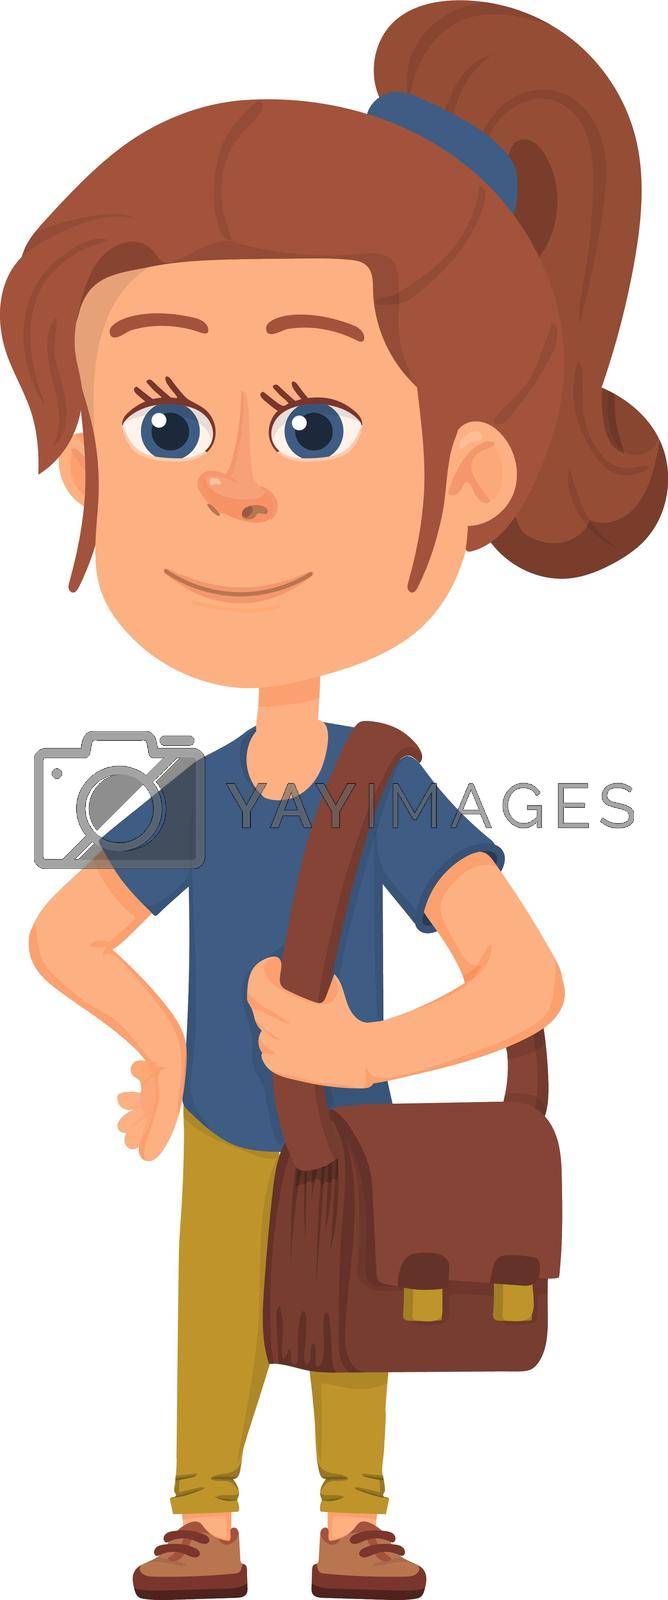 Royalty free image of Cute girl with ponytail. Cartoon school kid character by LadadikArt